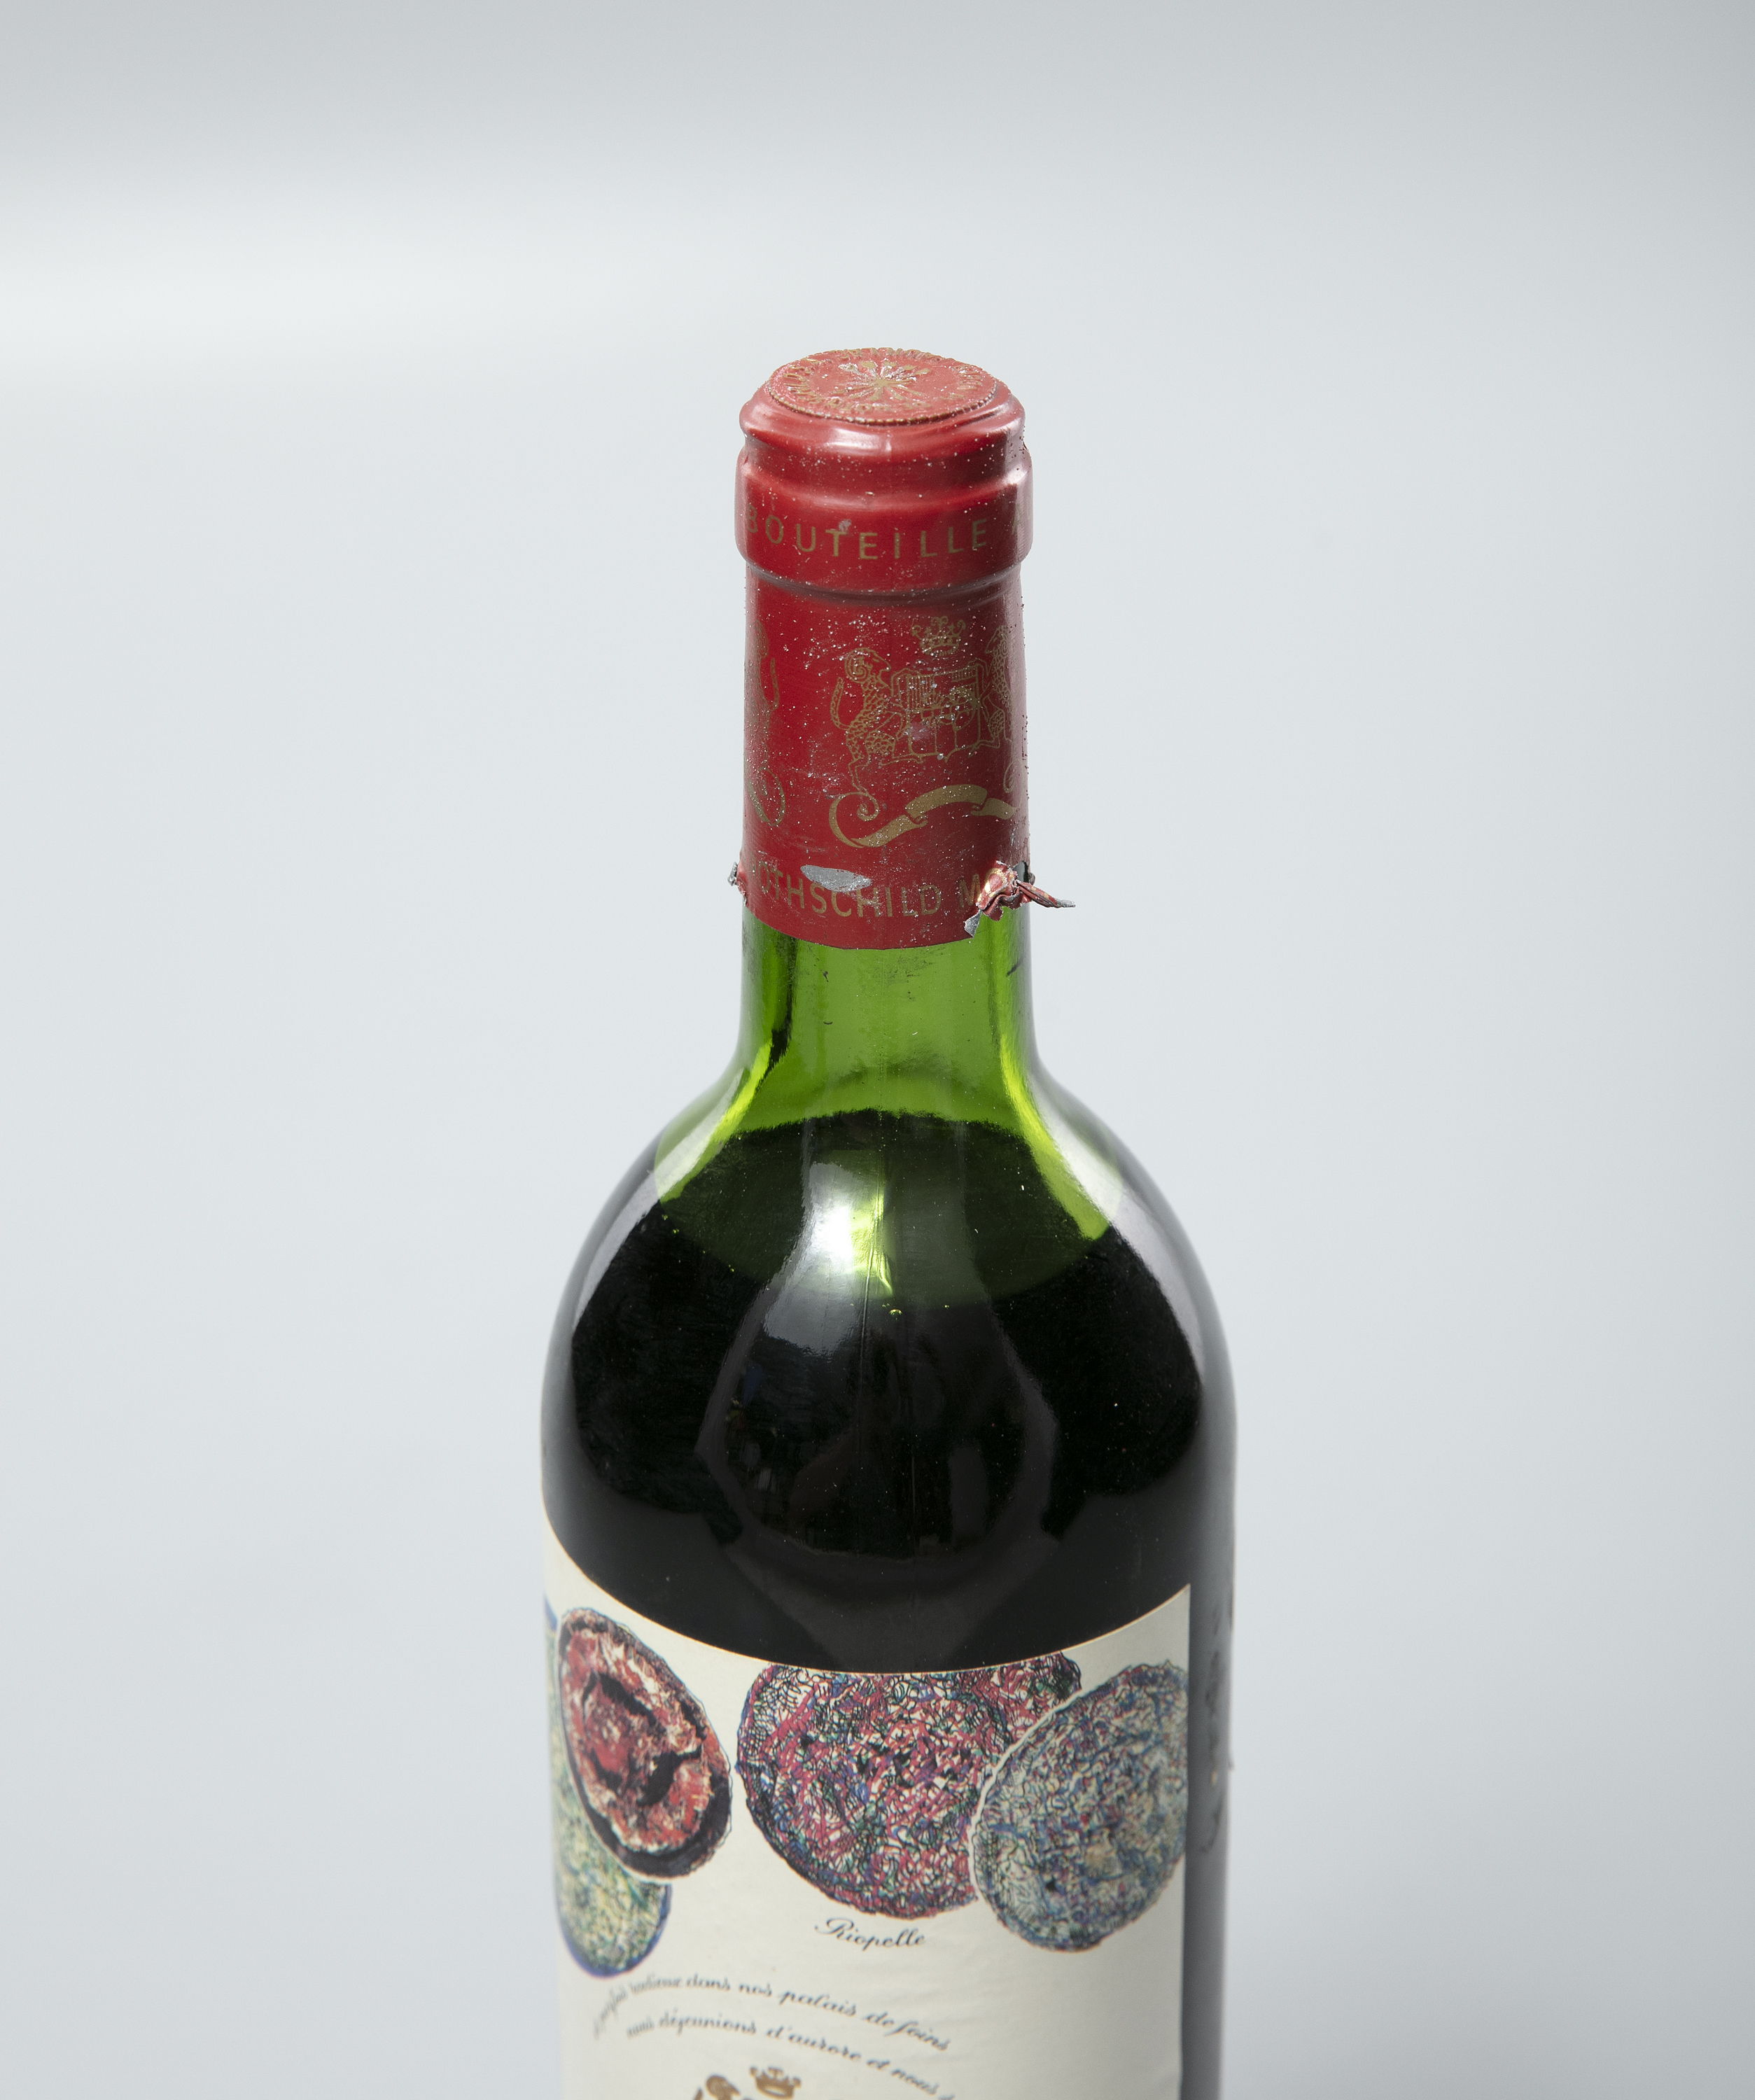 CHATEAU MOUTON ROTHSCHILD Pauillac, 1978 1 bottle - Image 4 of 5